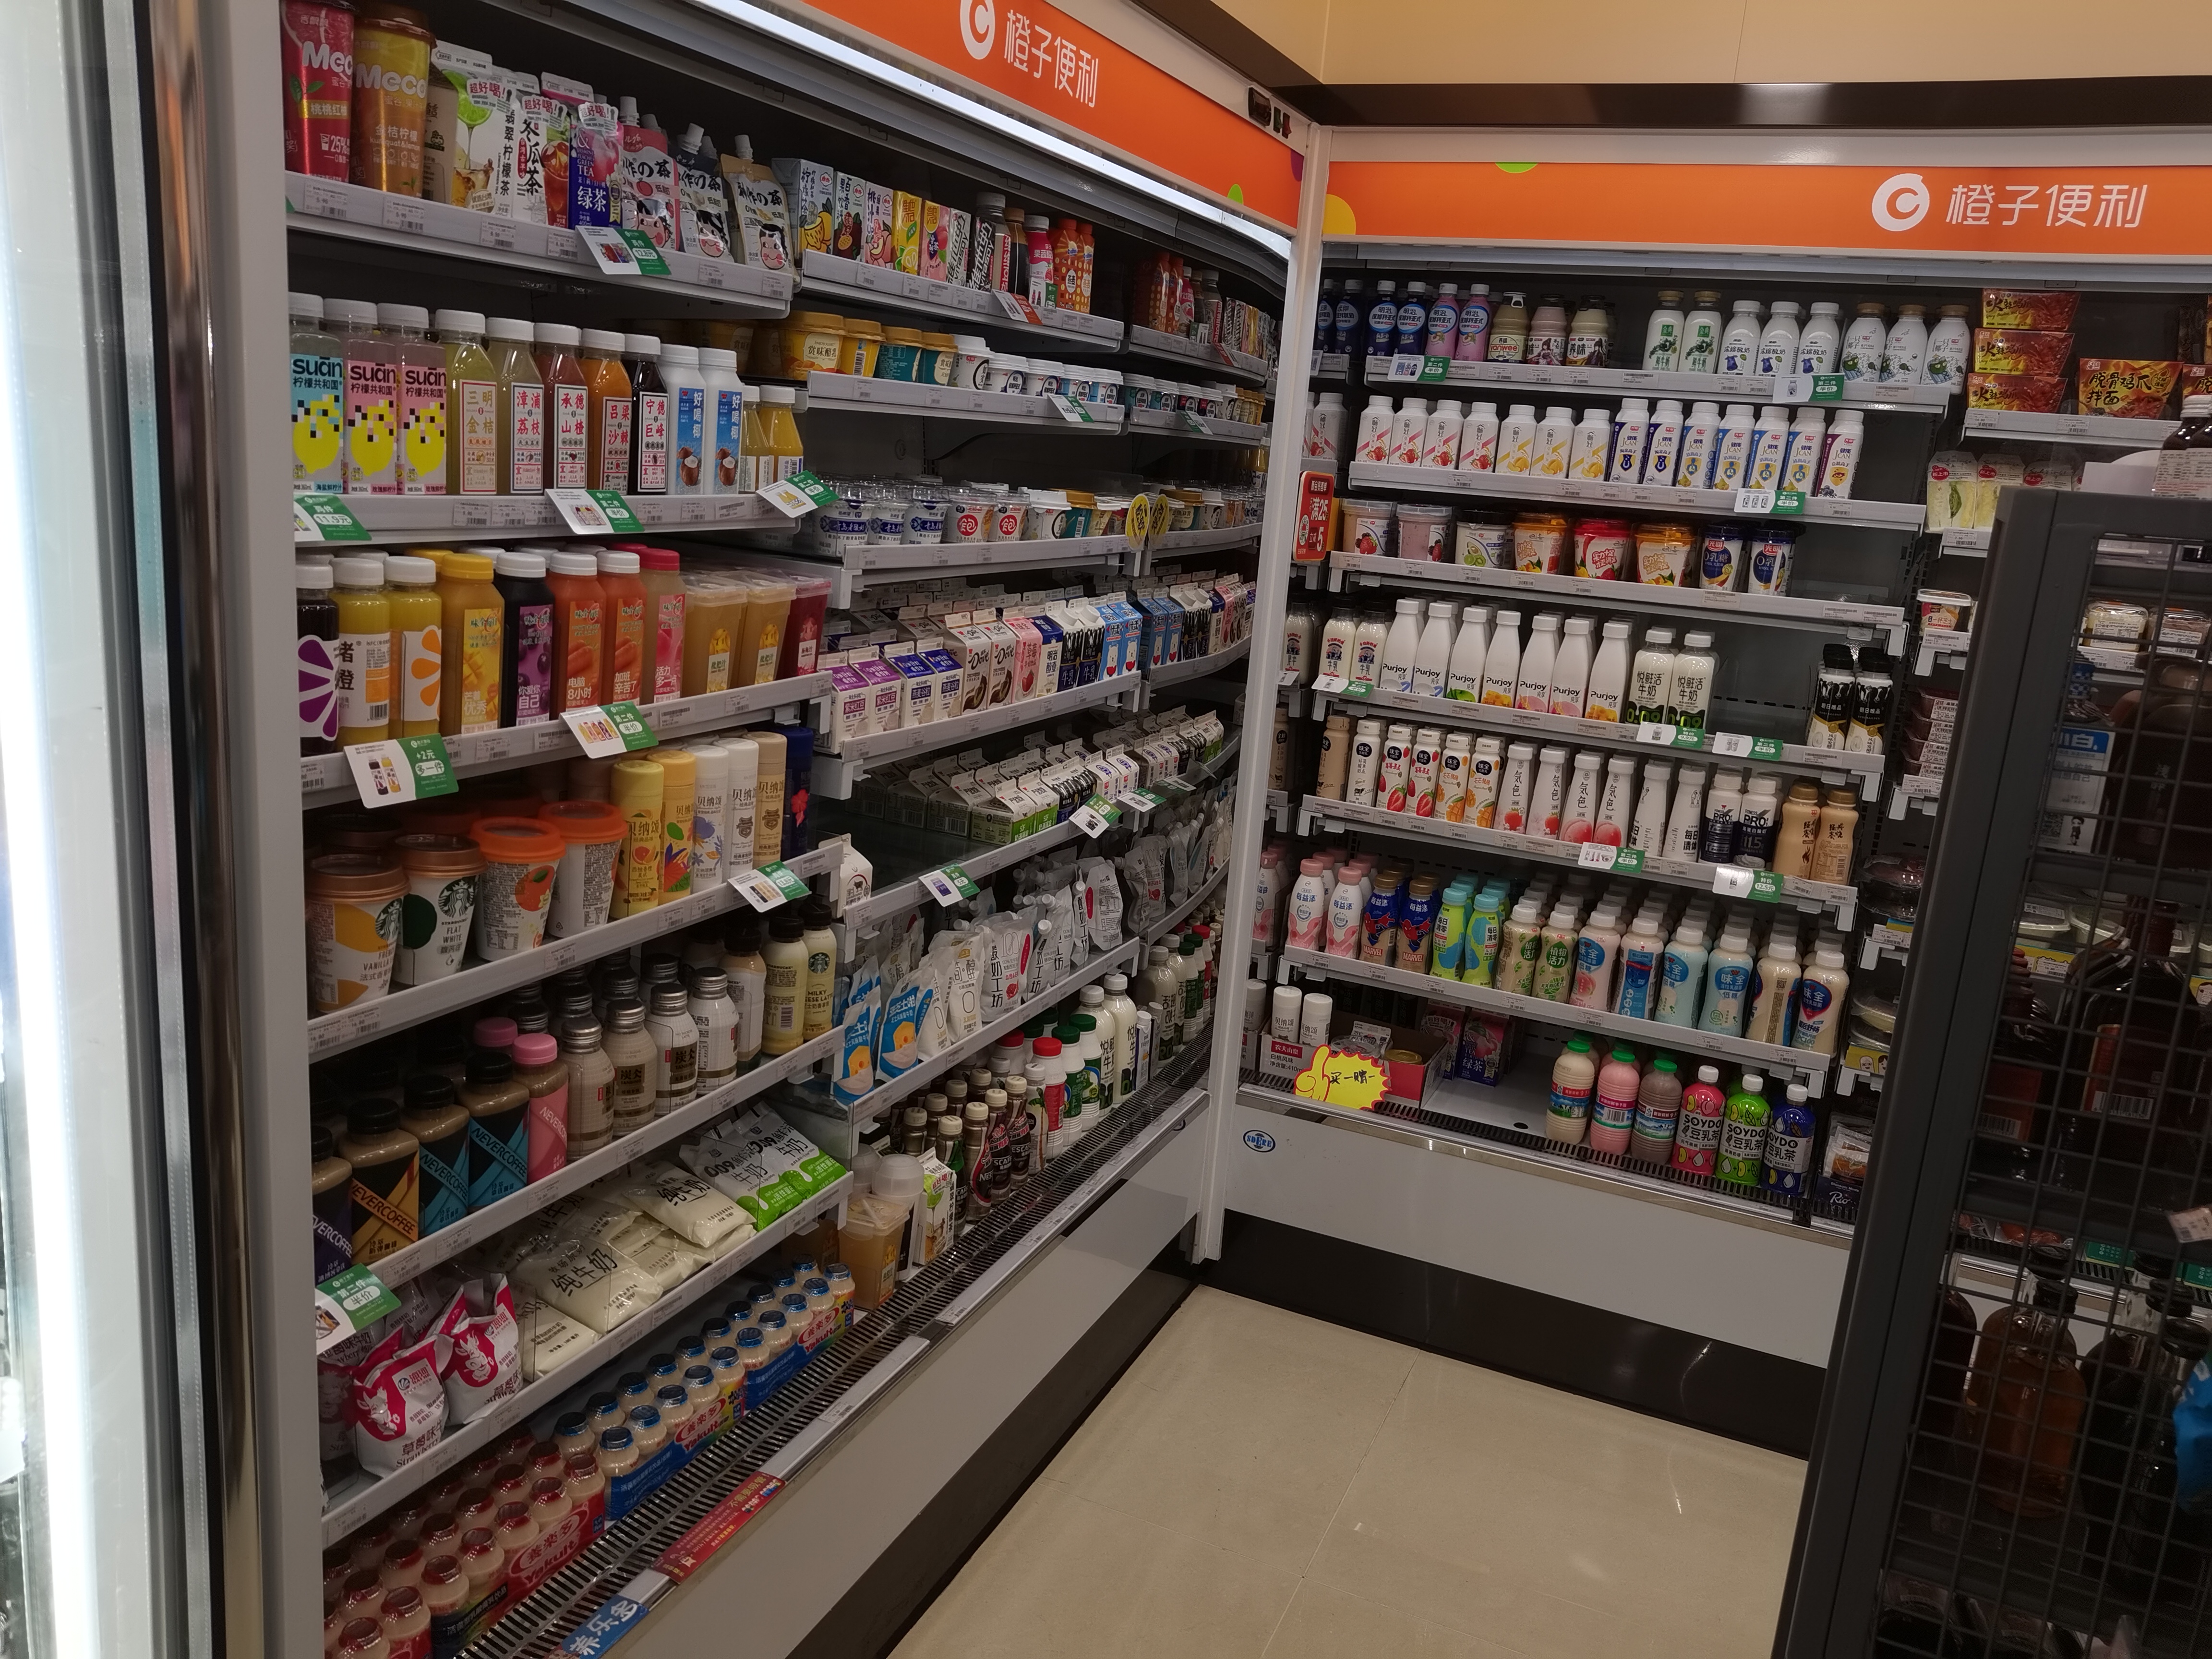 How should supermarkets choose refrigerators?